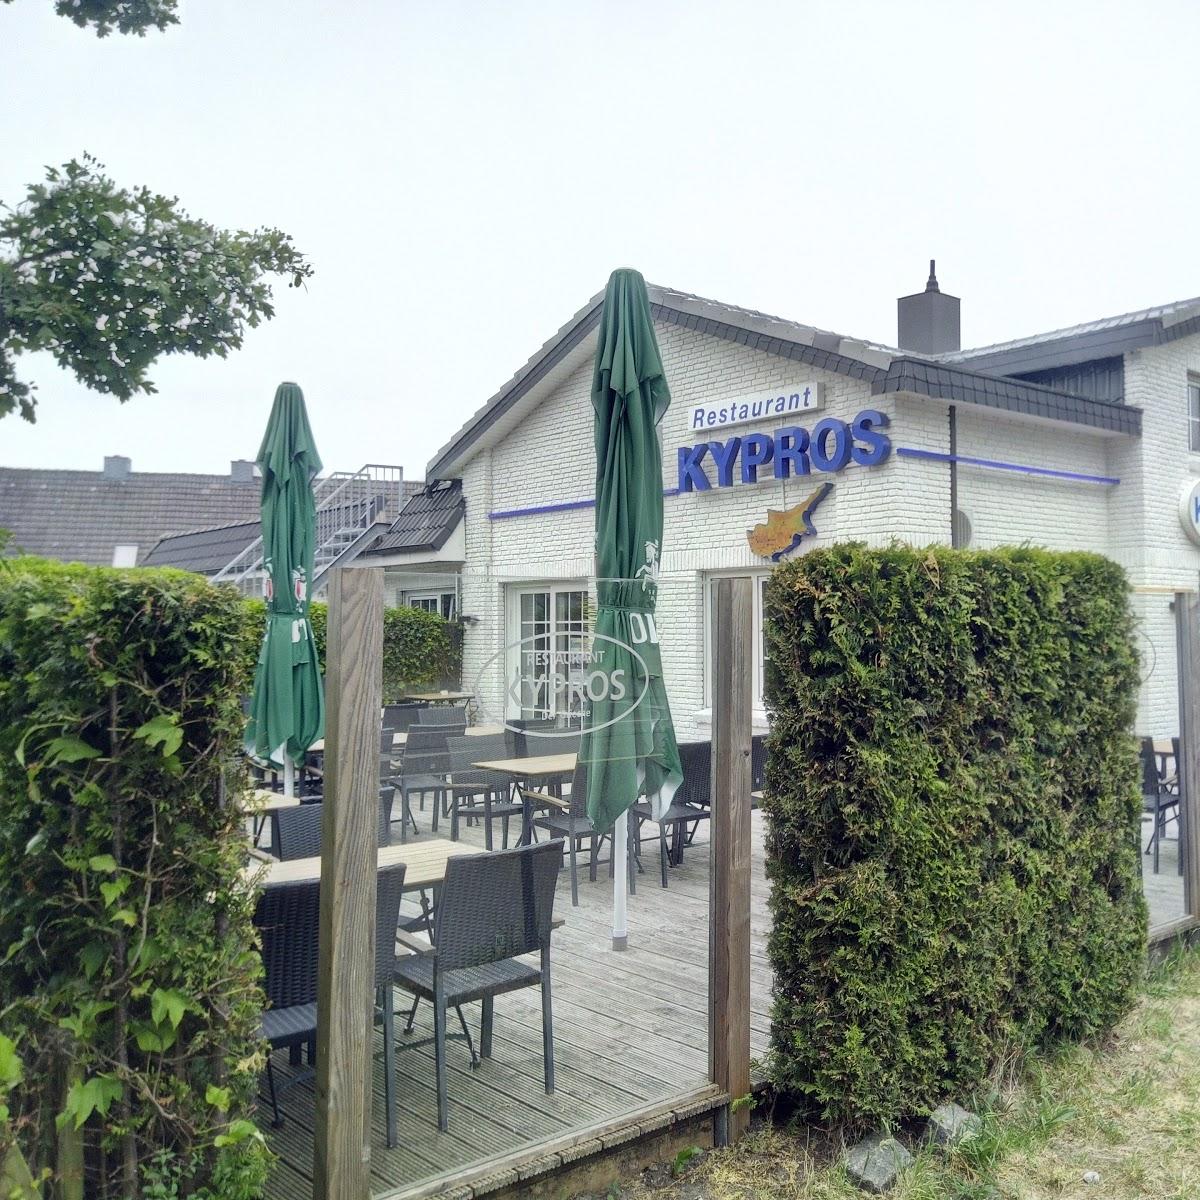 Restaurant "Restaurant Kypros" in  Heide